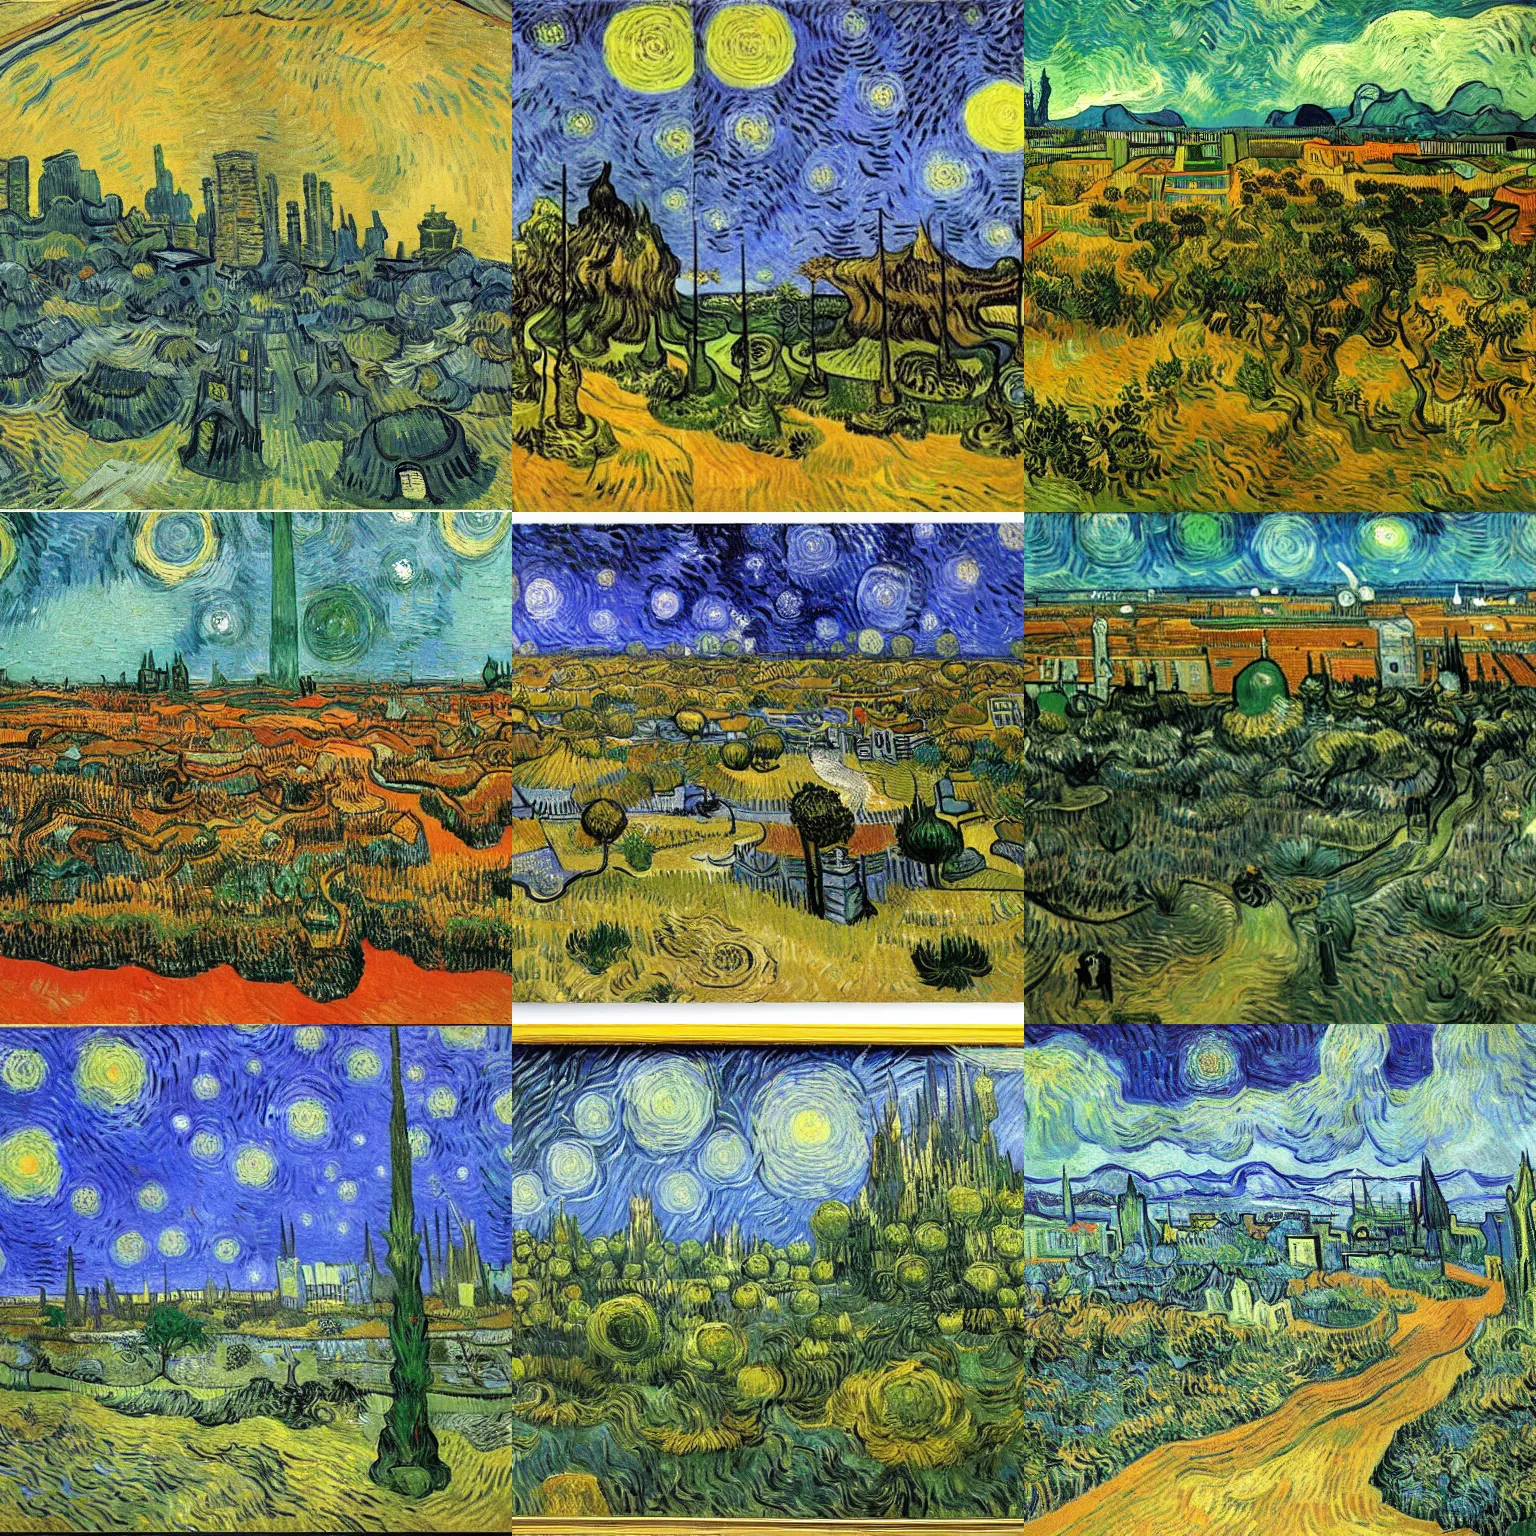 Prompt: futuristic landscape of a lush city, by Van Gogh